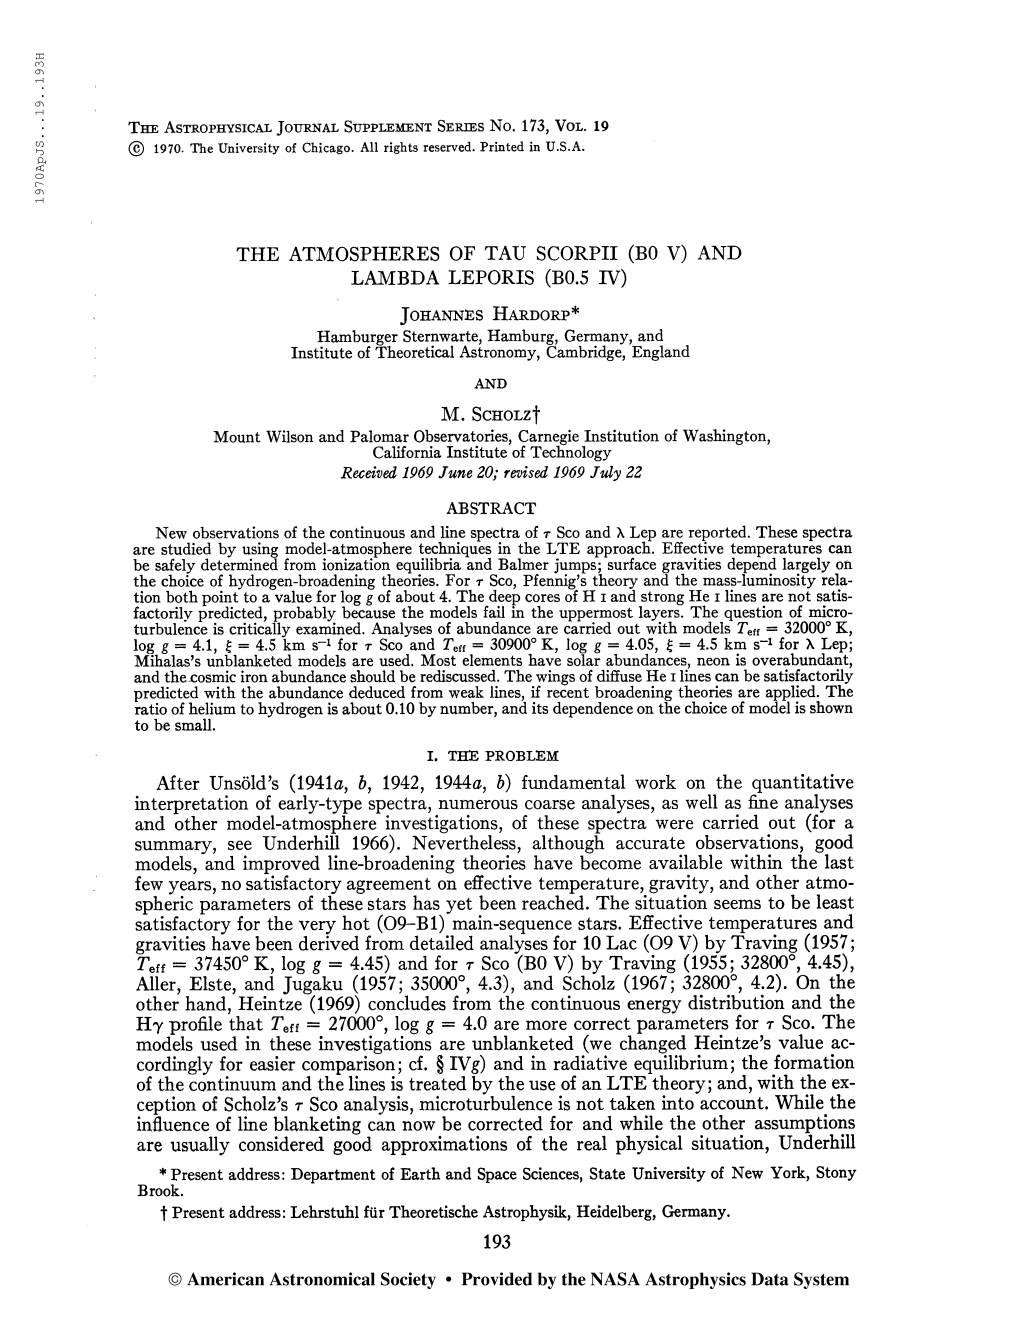 197Oapjs ... 19. .193H the Astrophysical Journal Supplement